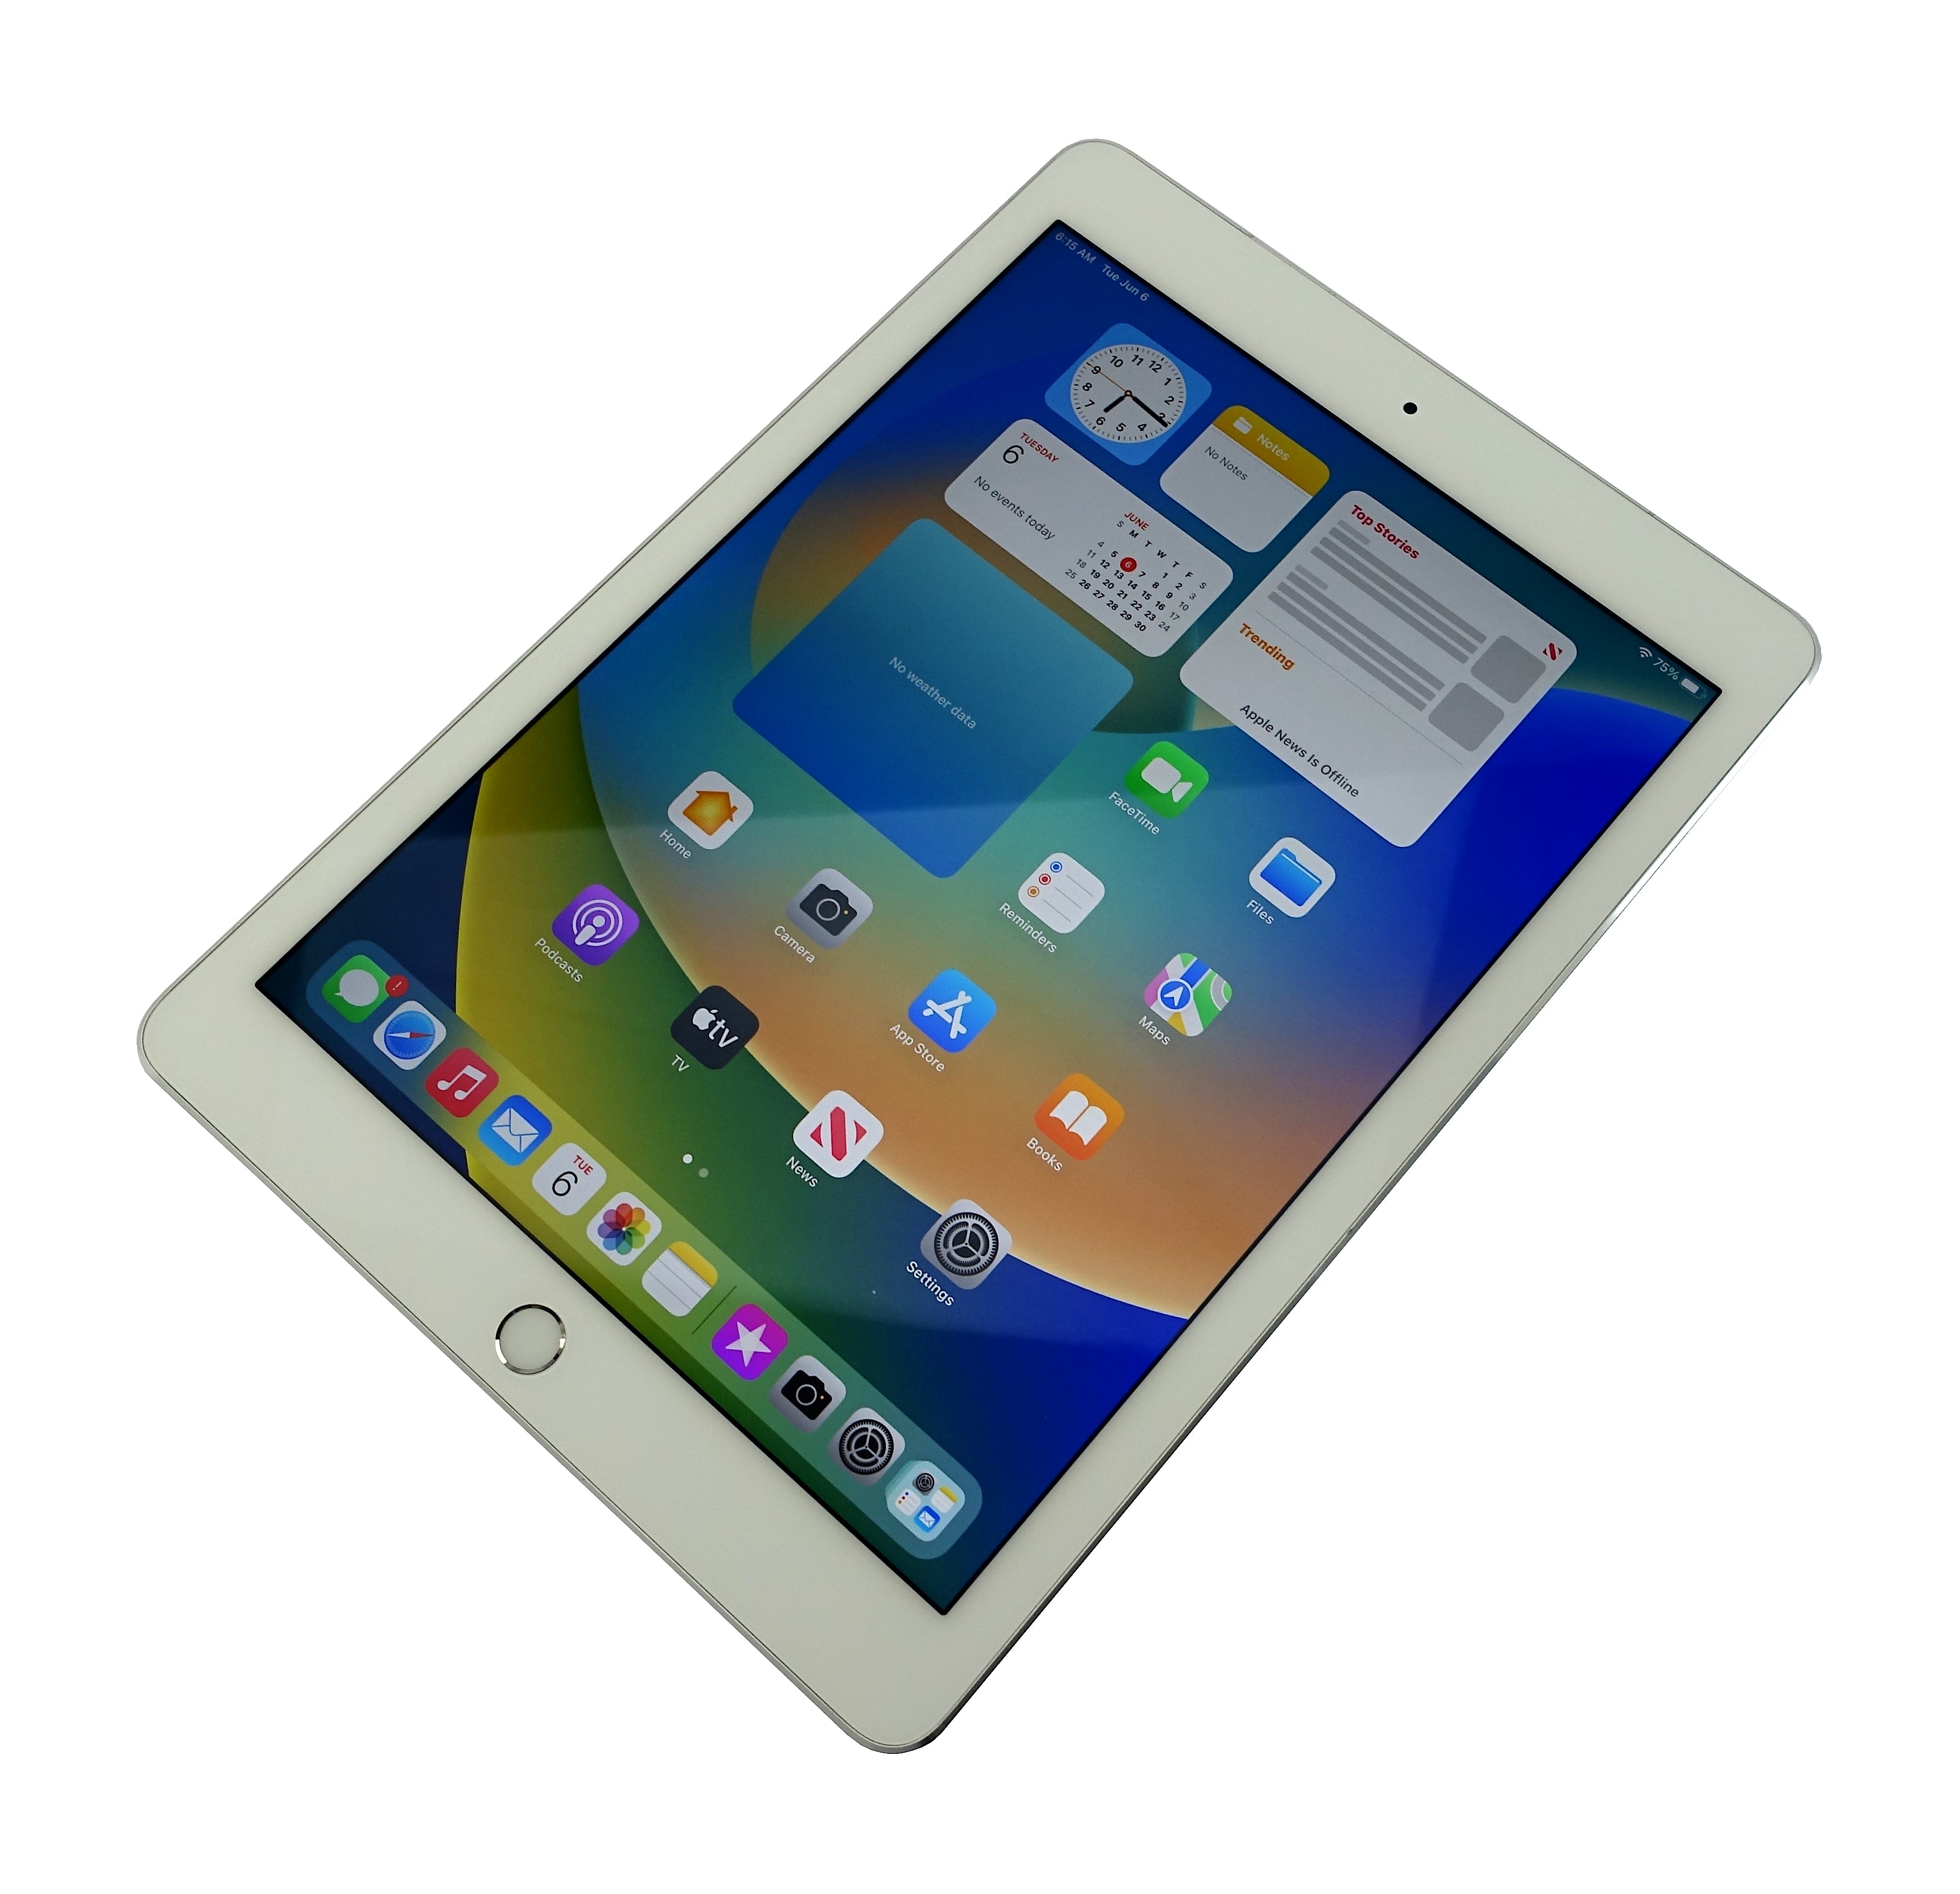 Apple iPad Pro 9.7" Tablet, 32GB, WiFi + GSM, Silver, A1674